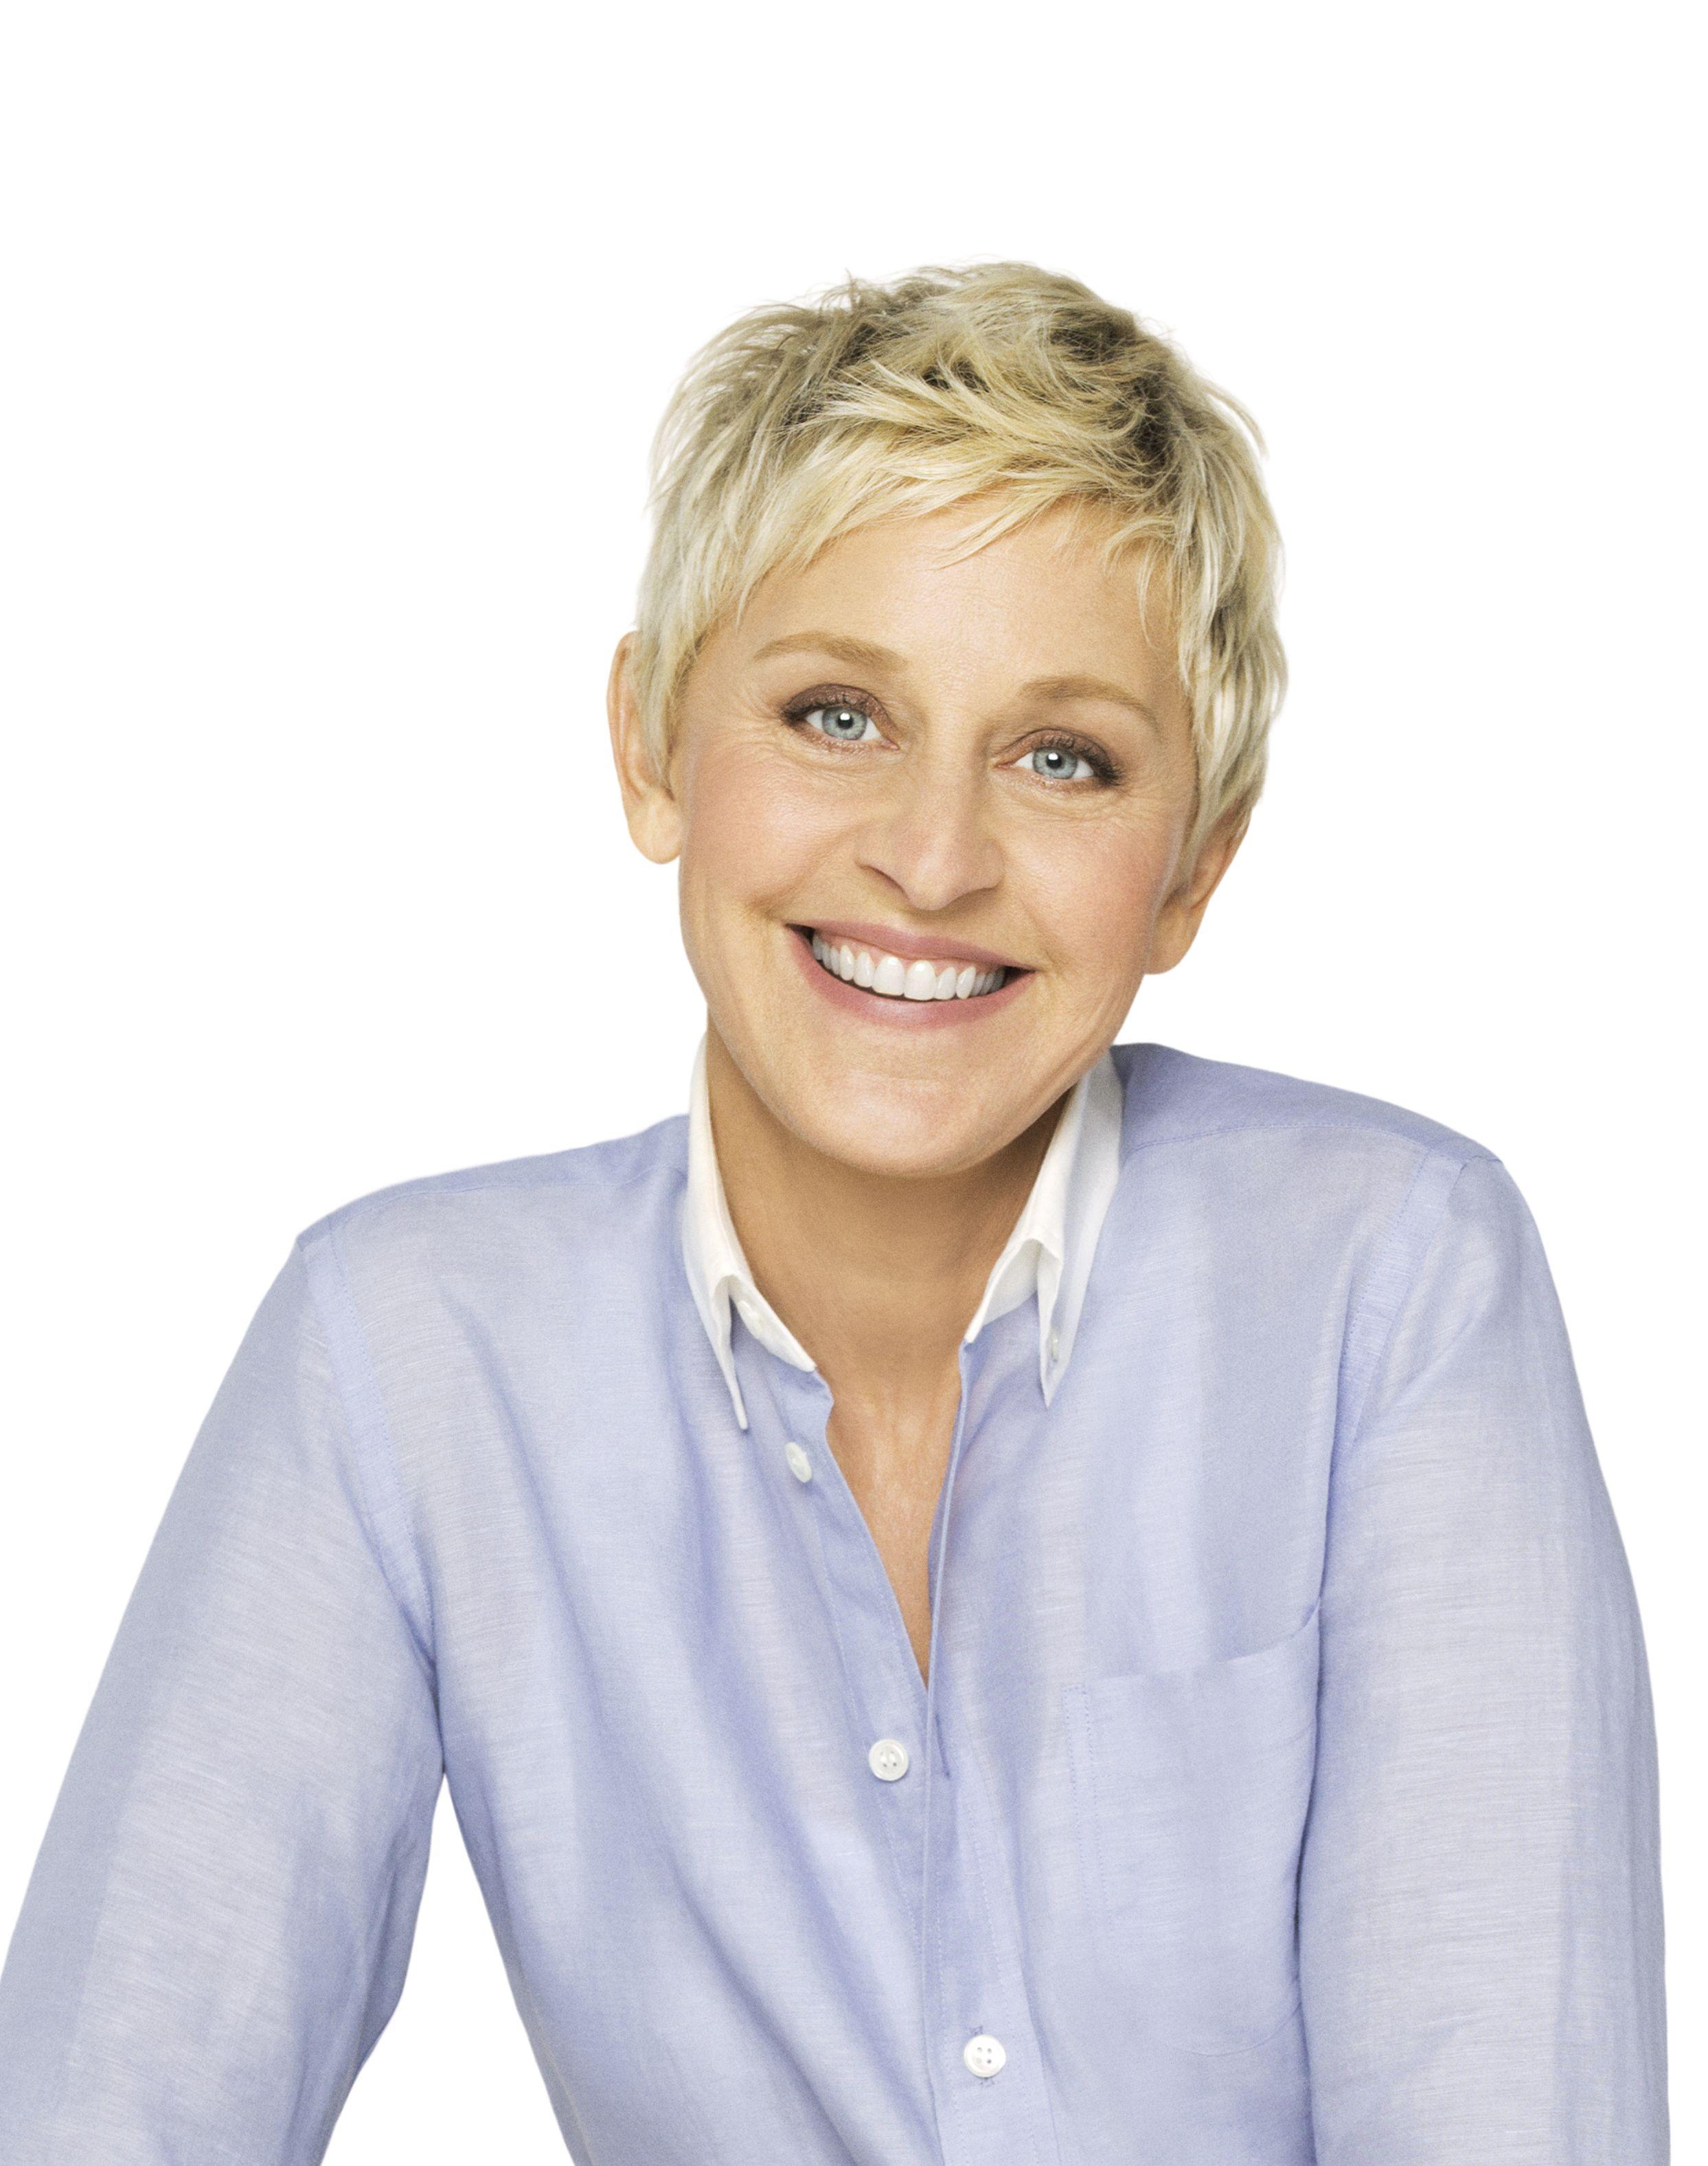 Ellen DeGeneres Wallpaper High Quality